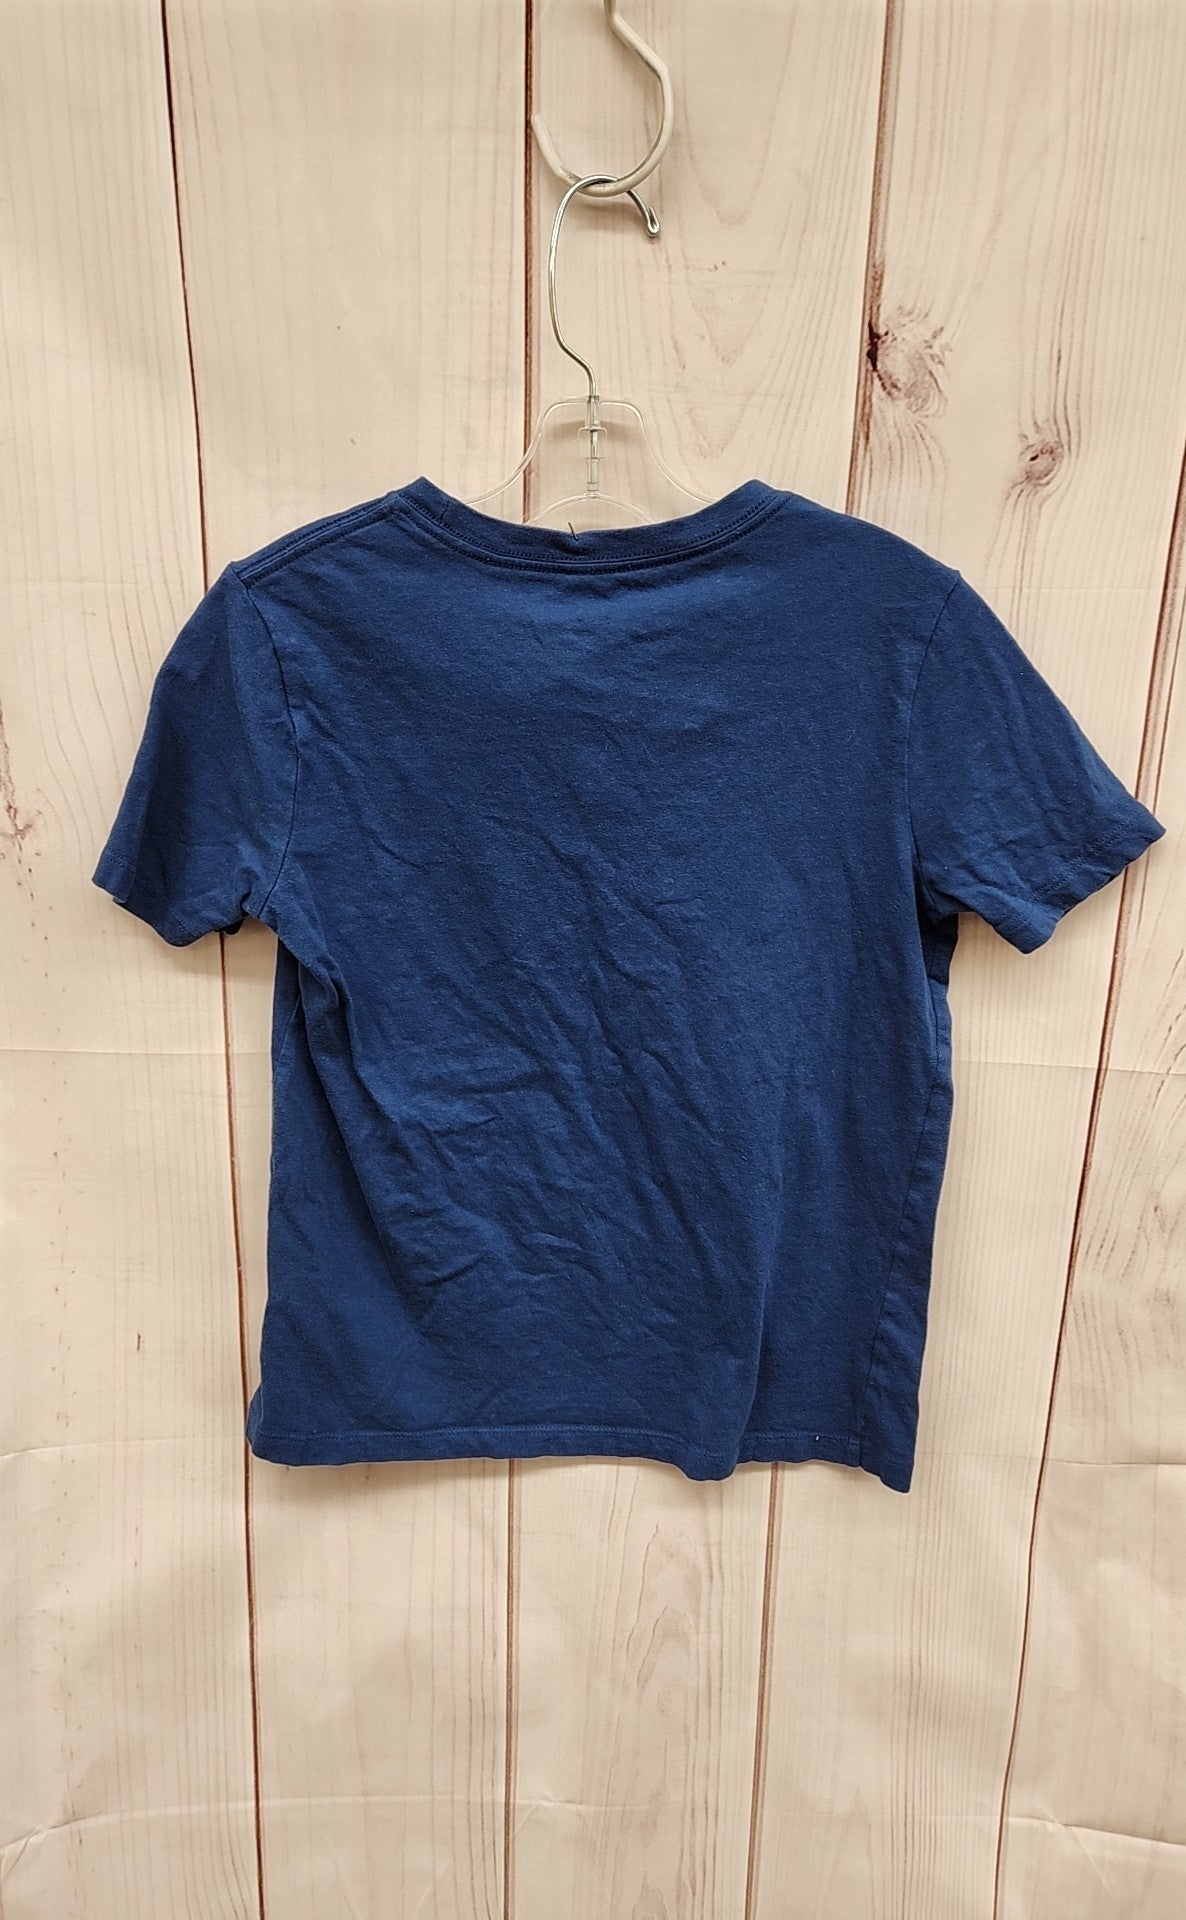 Old Navy Boy's Size 8 Blue Shirt